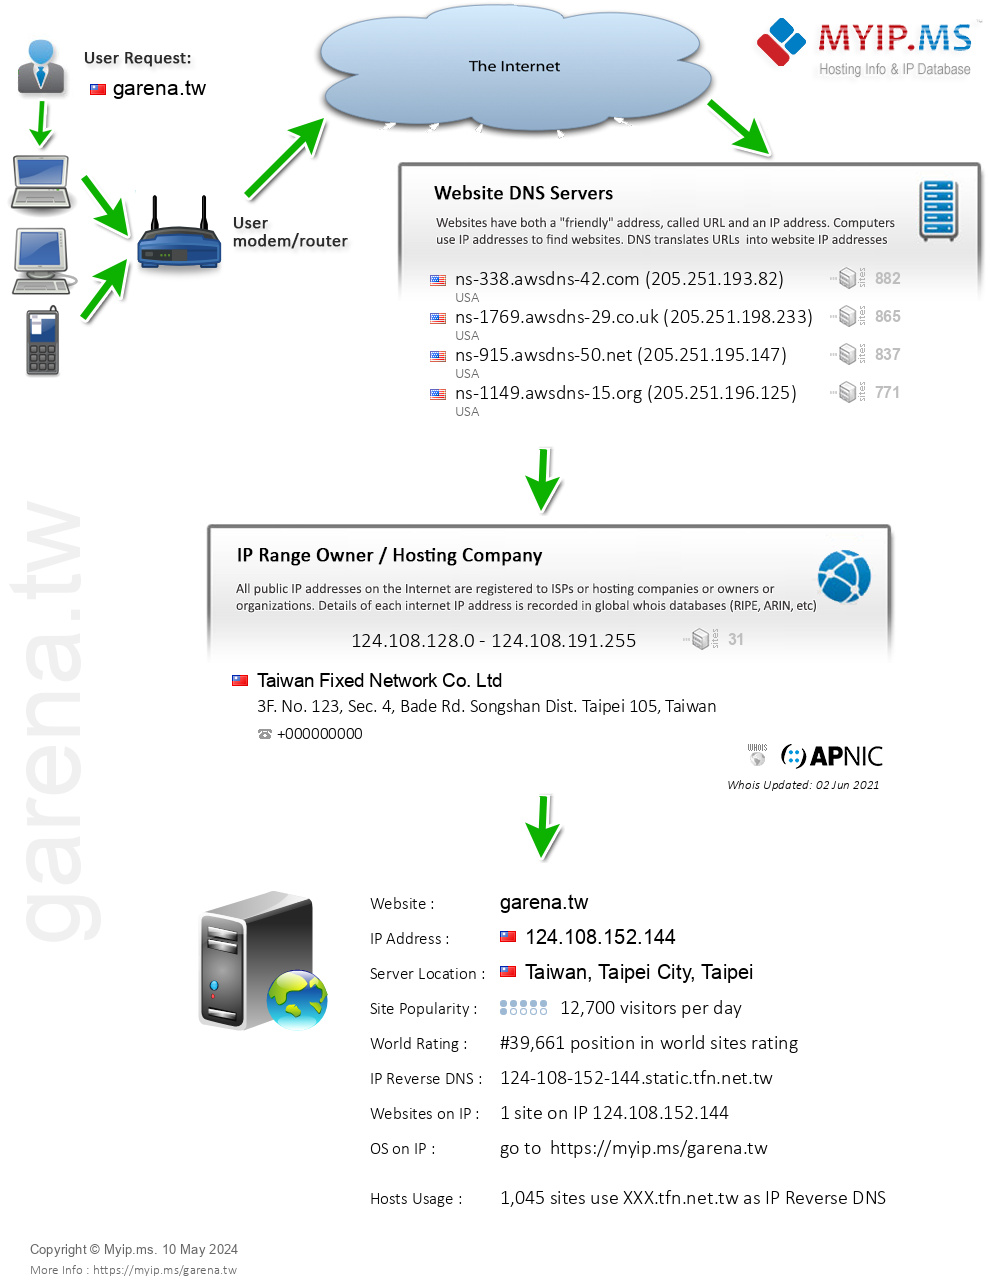 Garena.tw - Website Hosting Visual IP Diagram